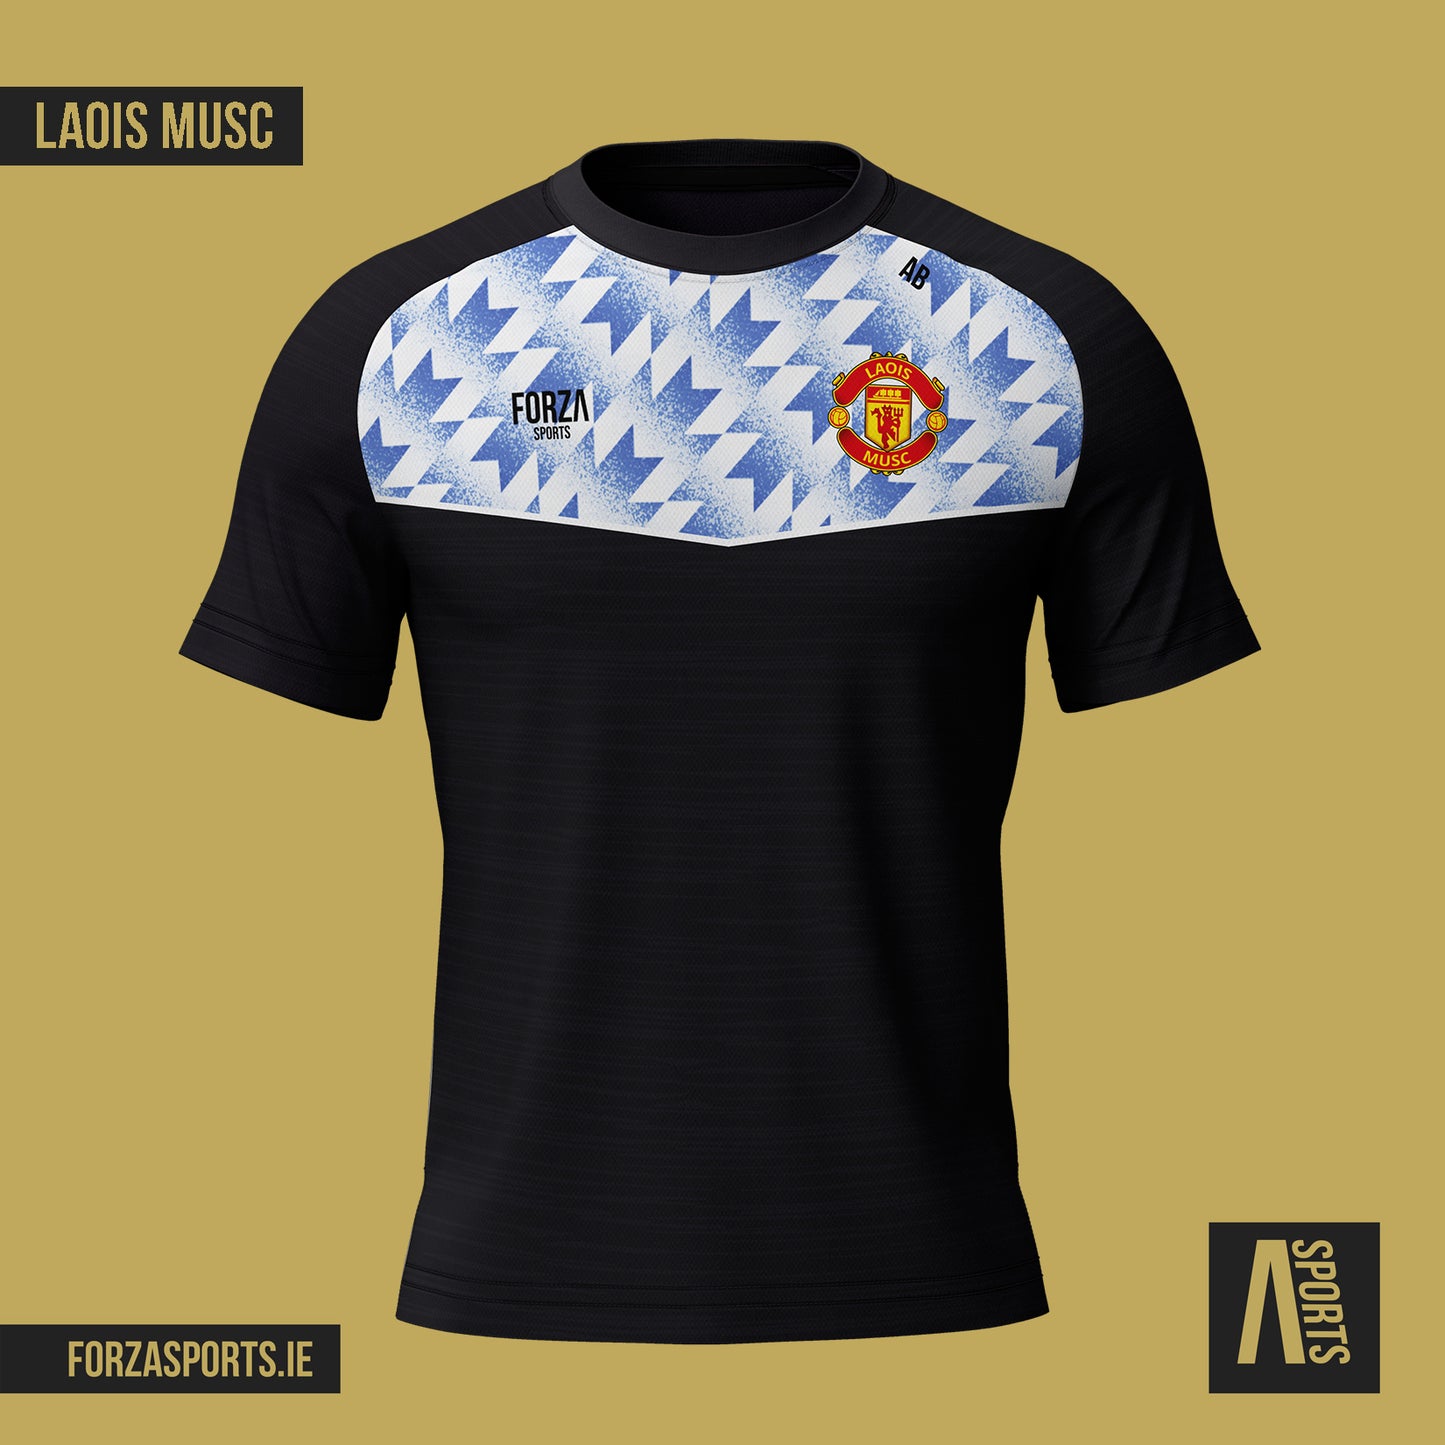 Laois MUSC T-Shirt